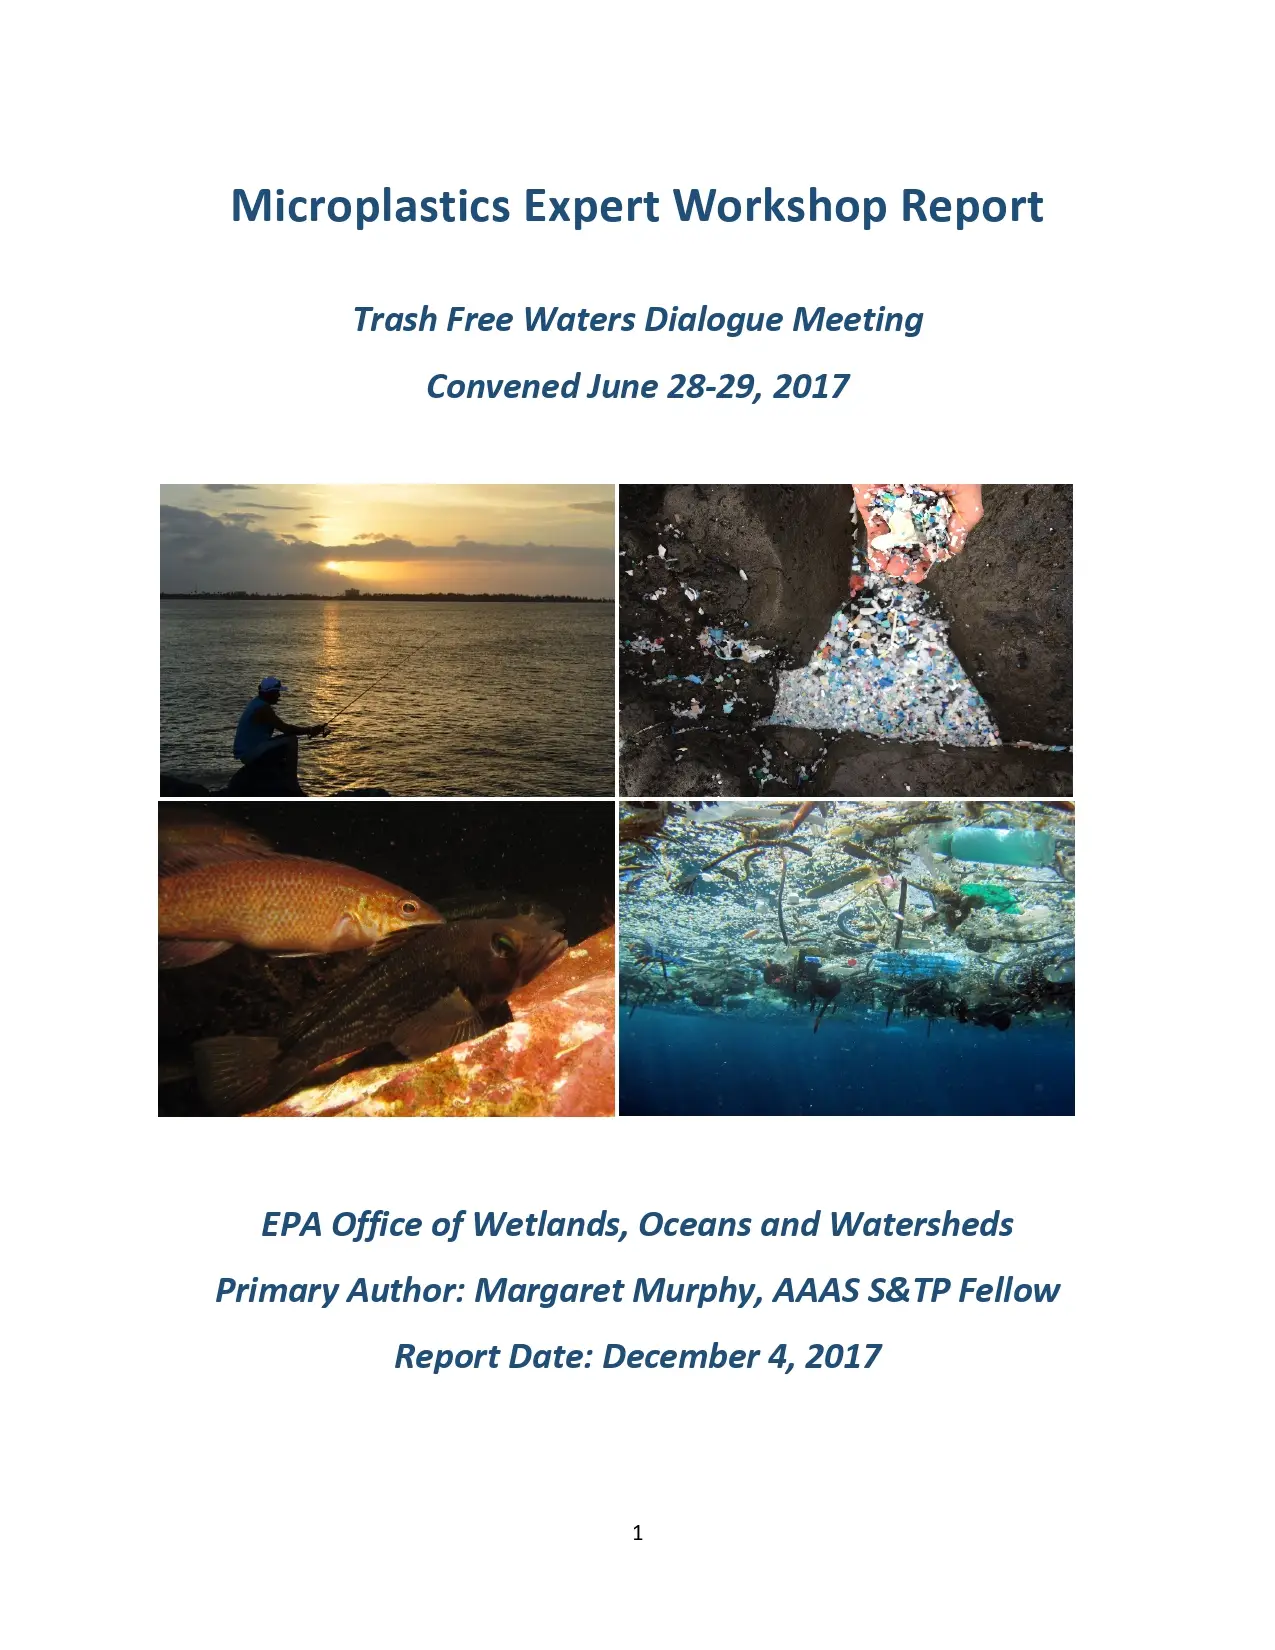 Microplastics Expert Workshop Report: Trash Free Waters Dialogue Meeting